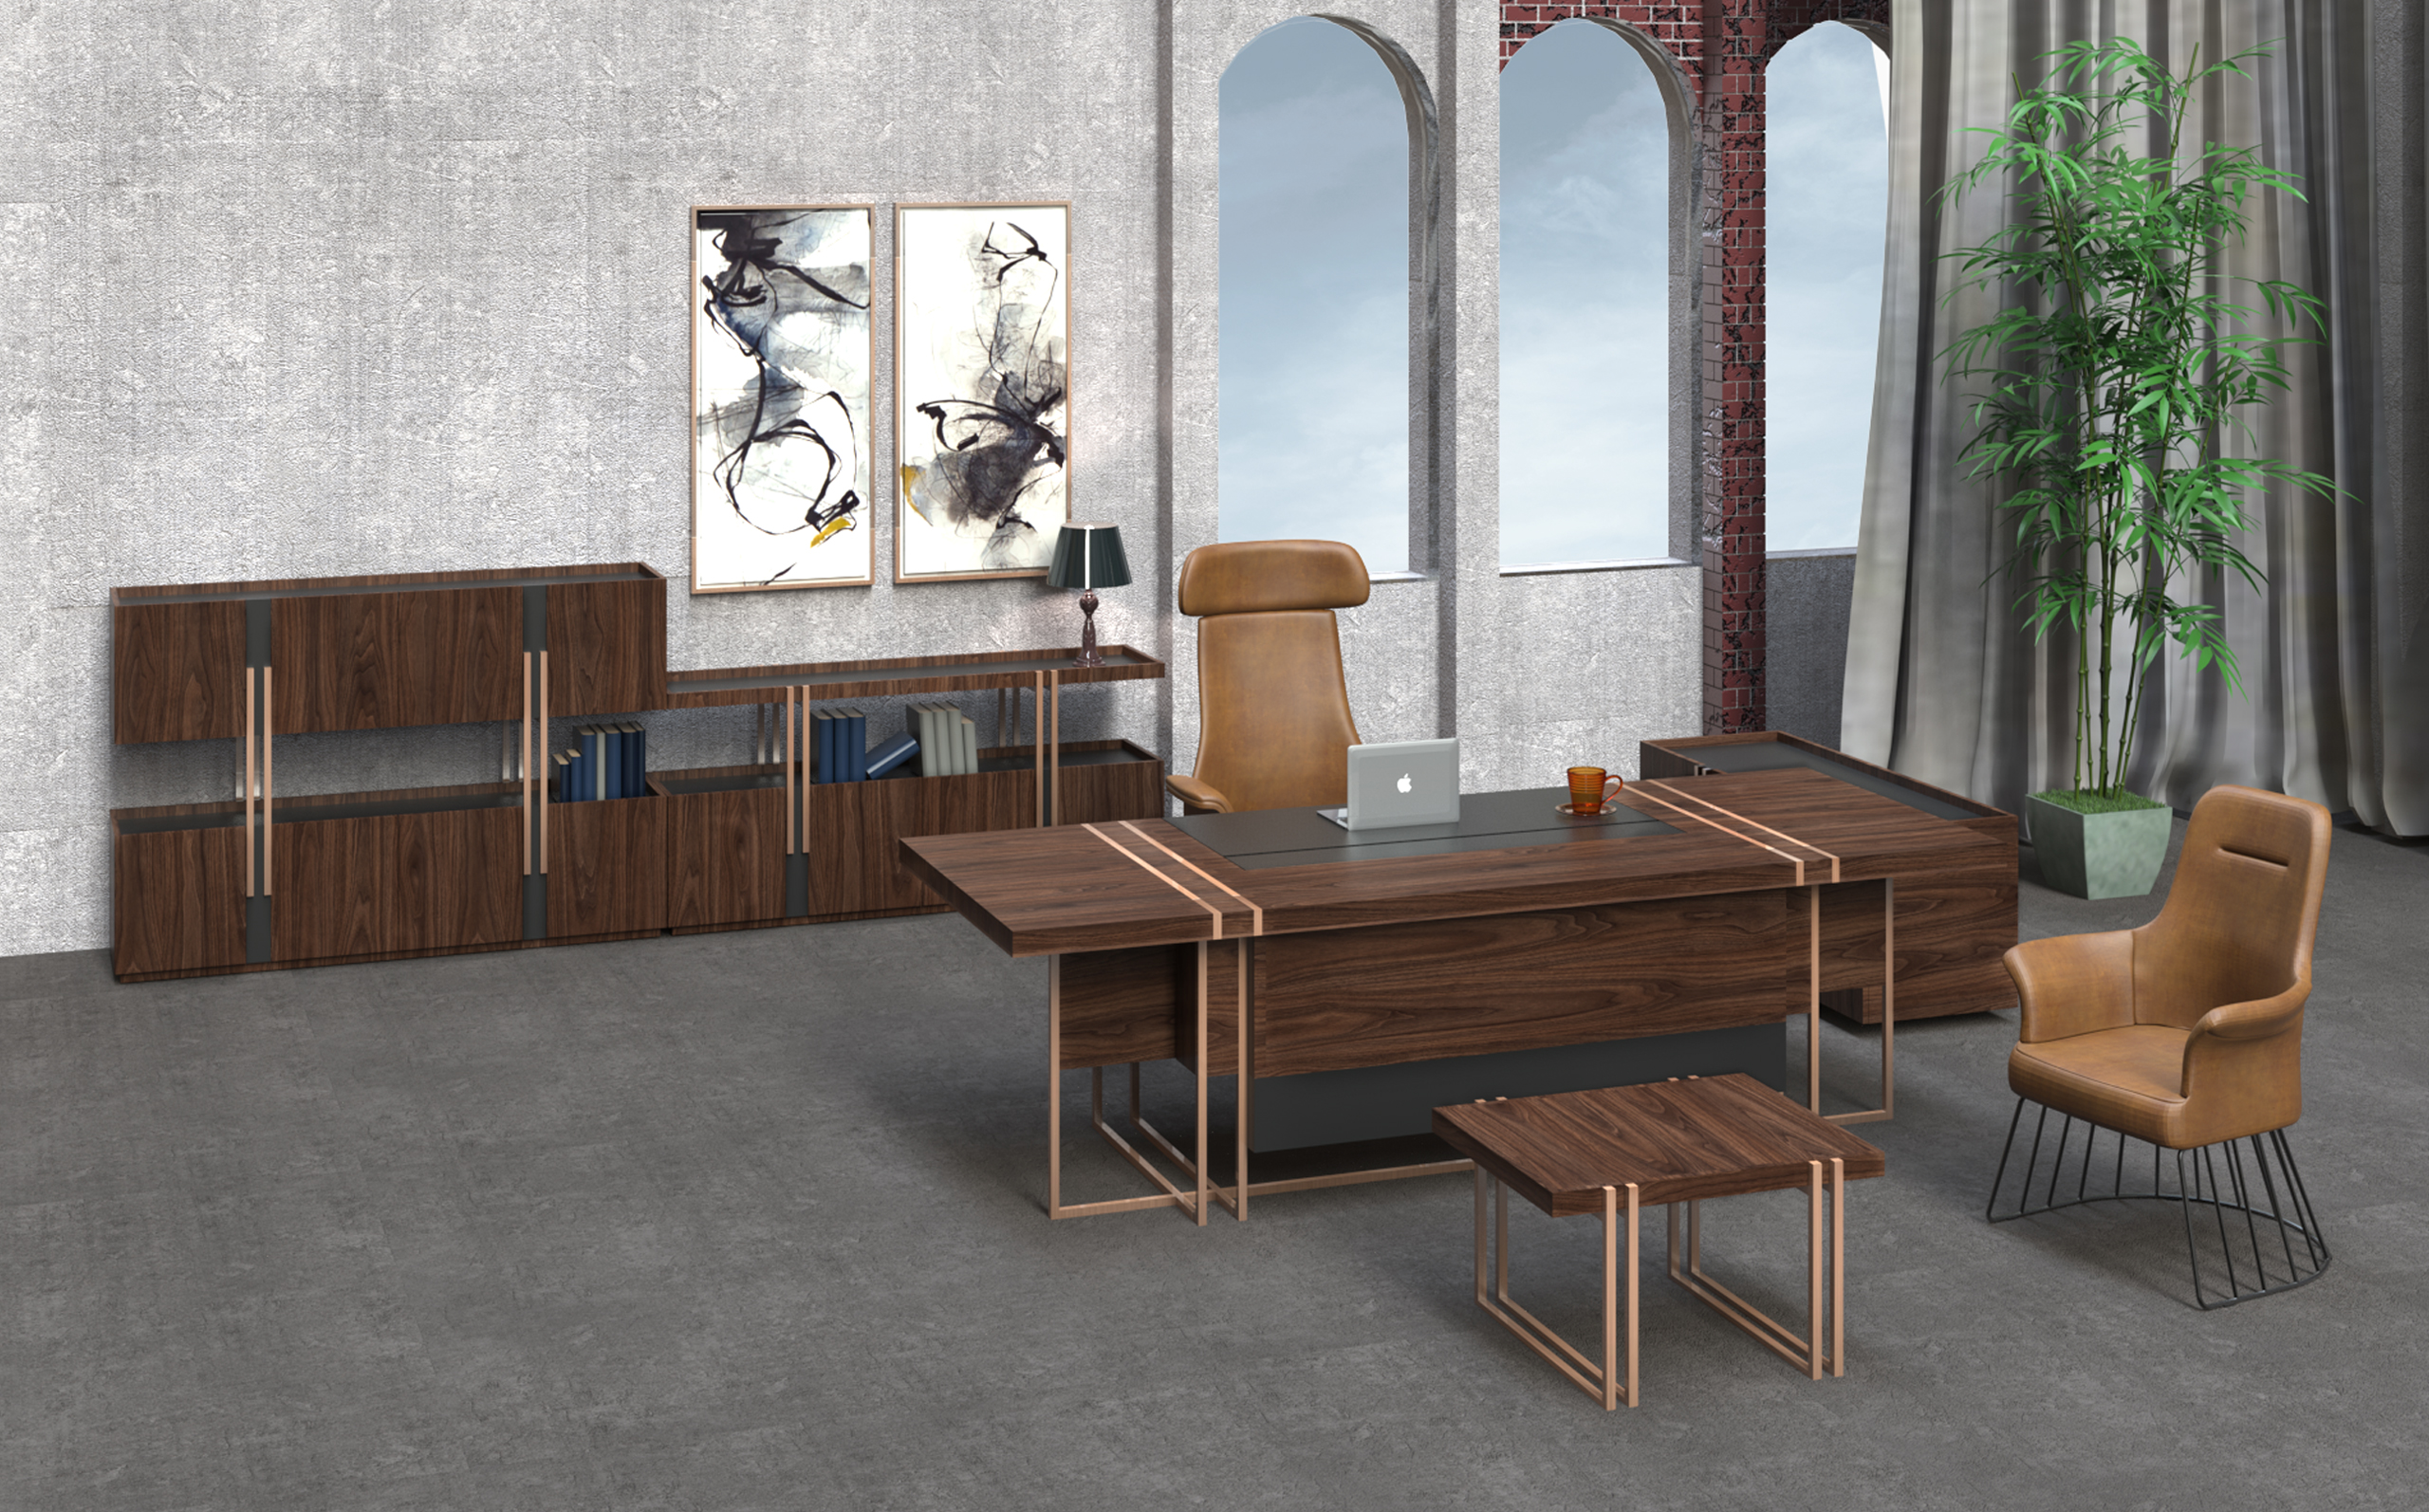 Doppia-Office-Furniture